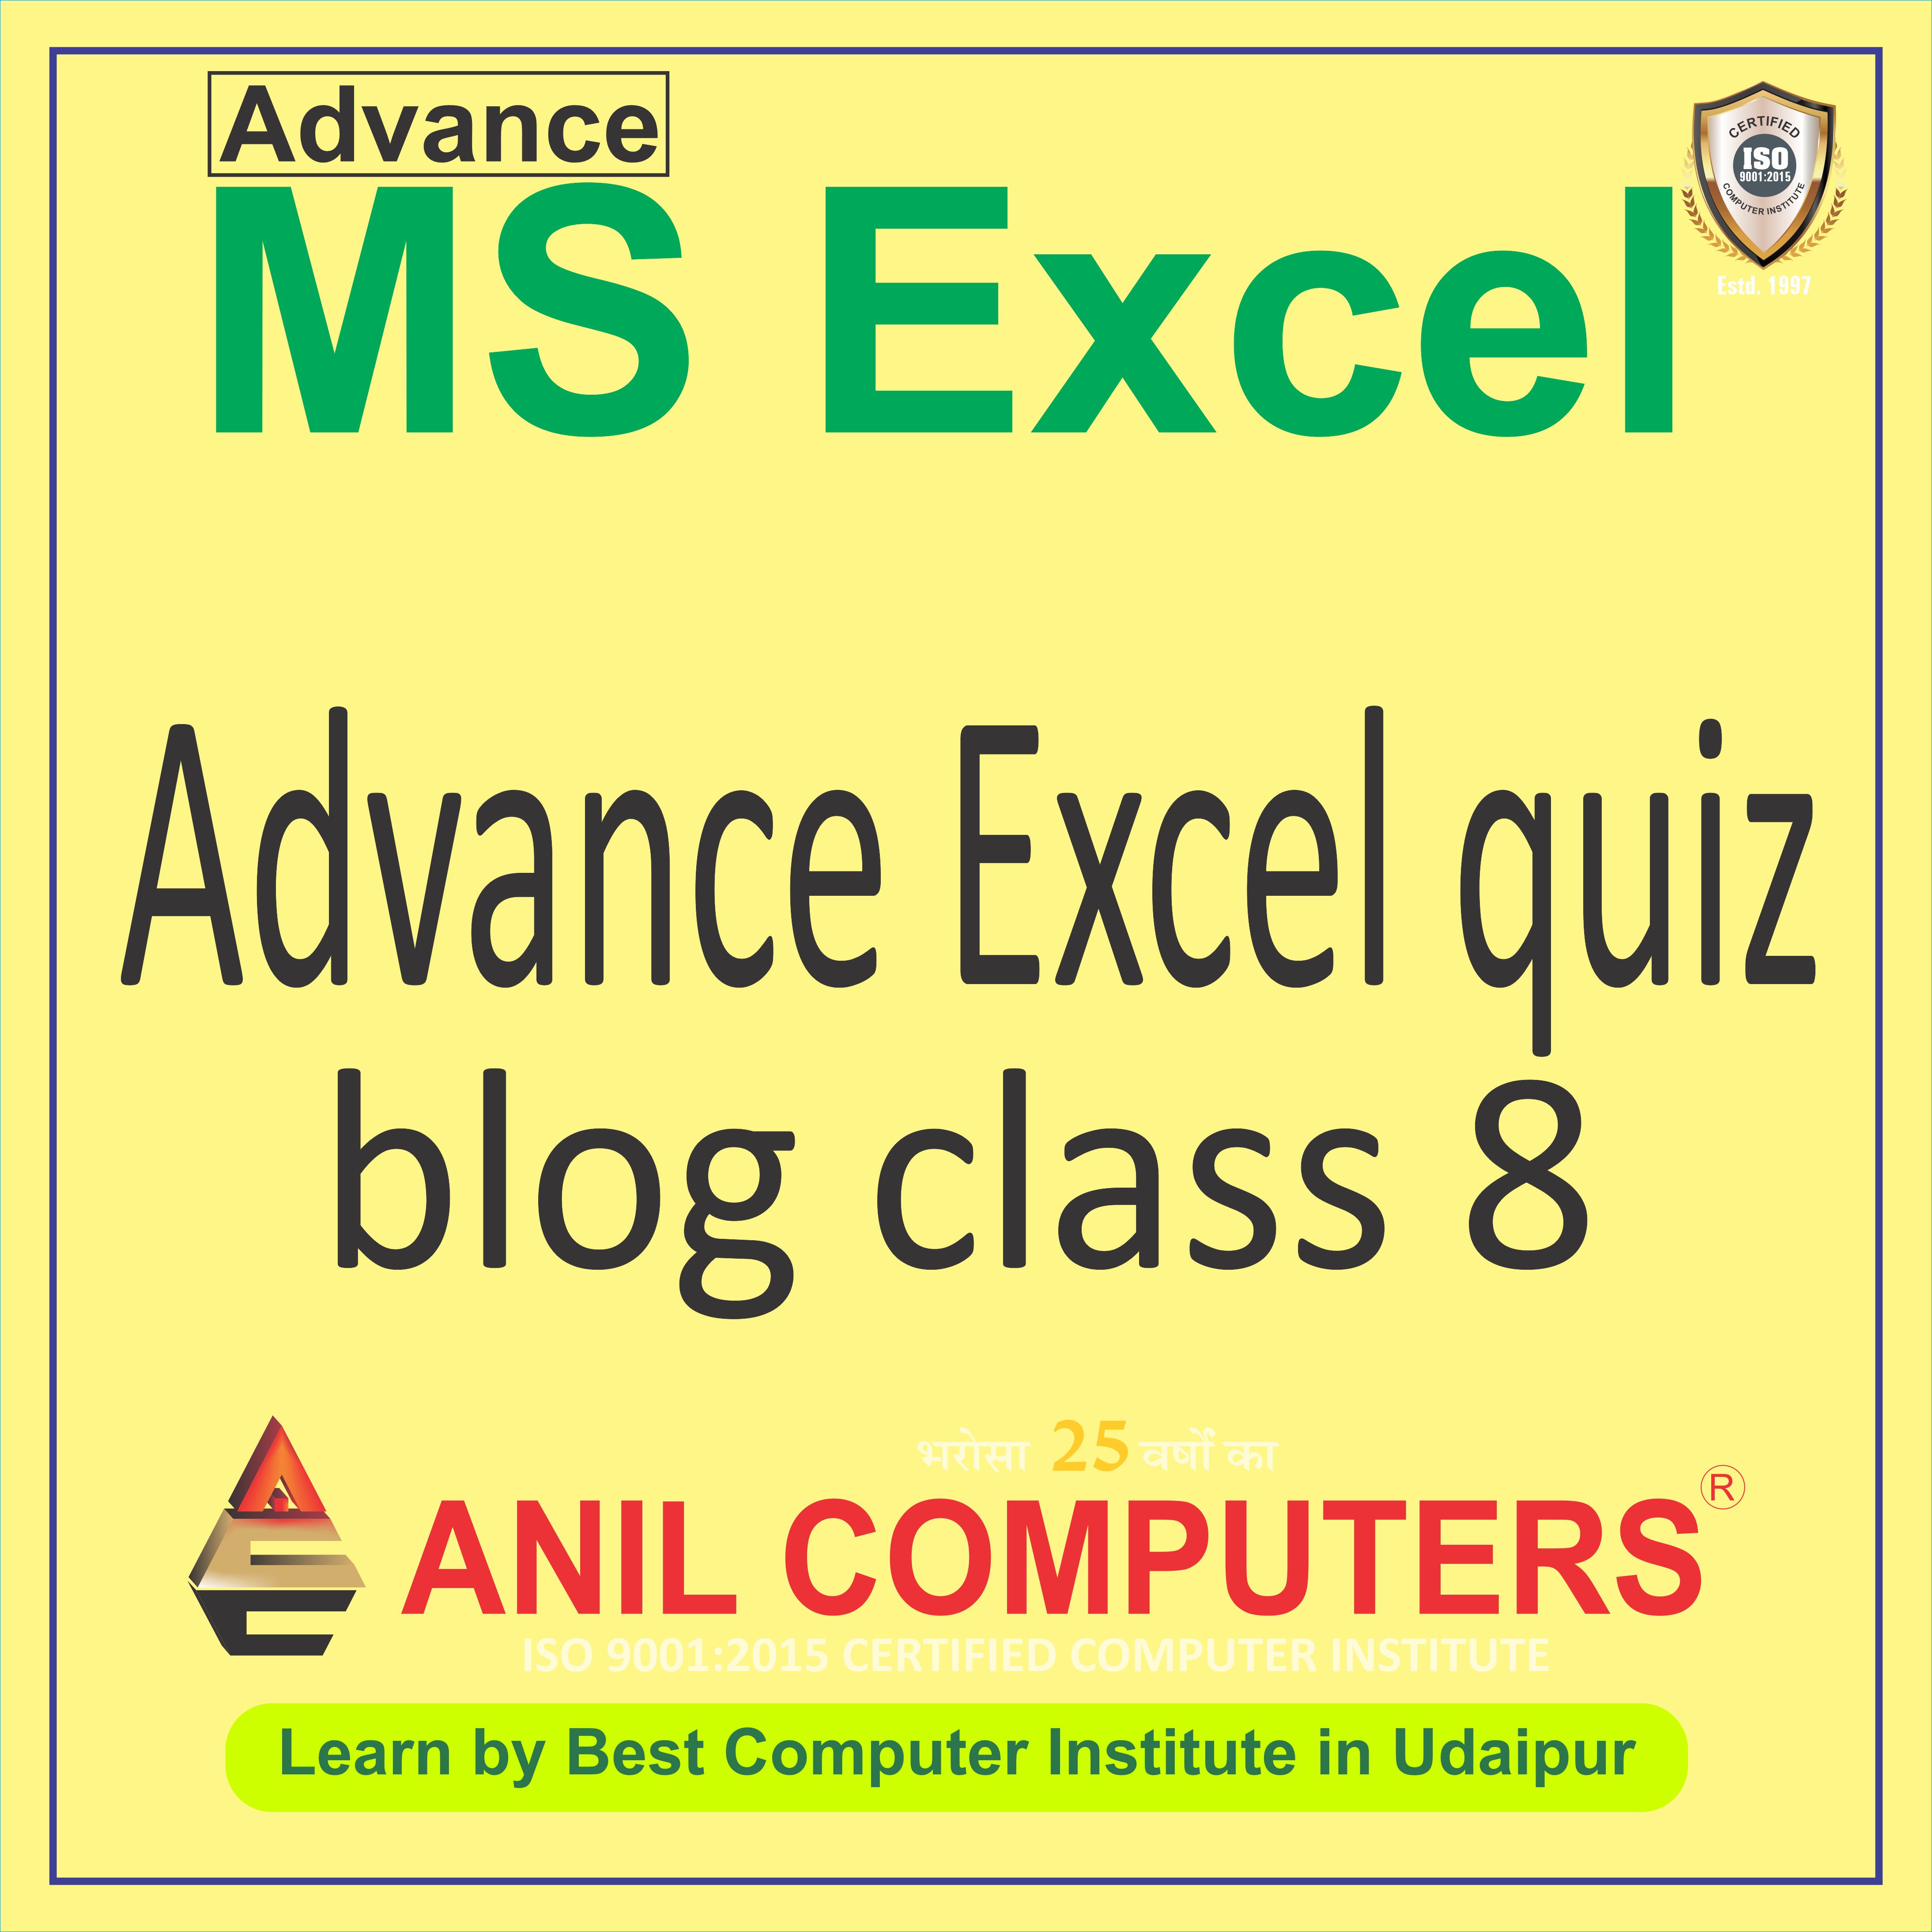 Advance Excel quiz blog class 8